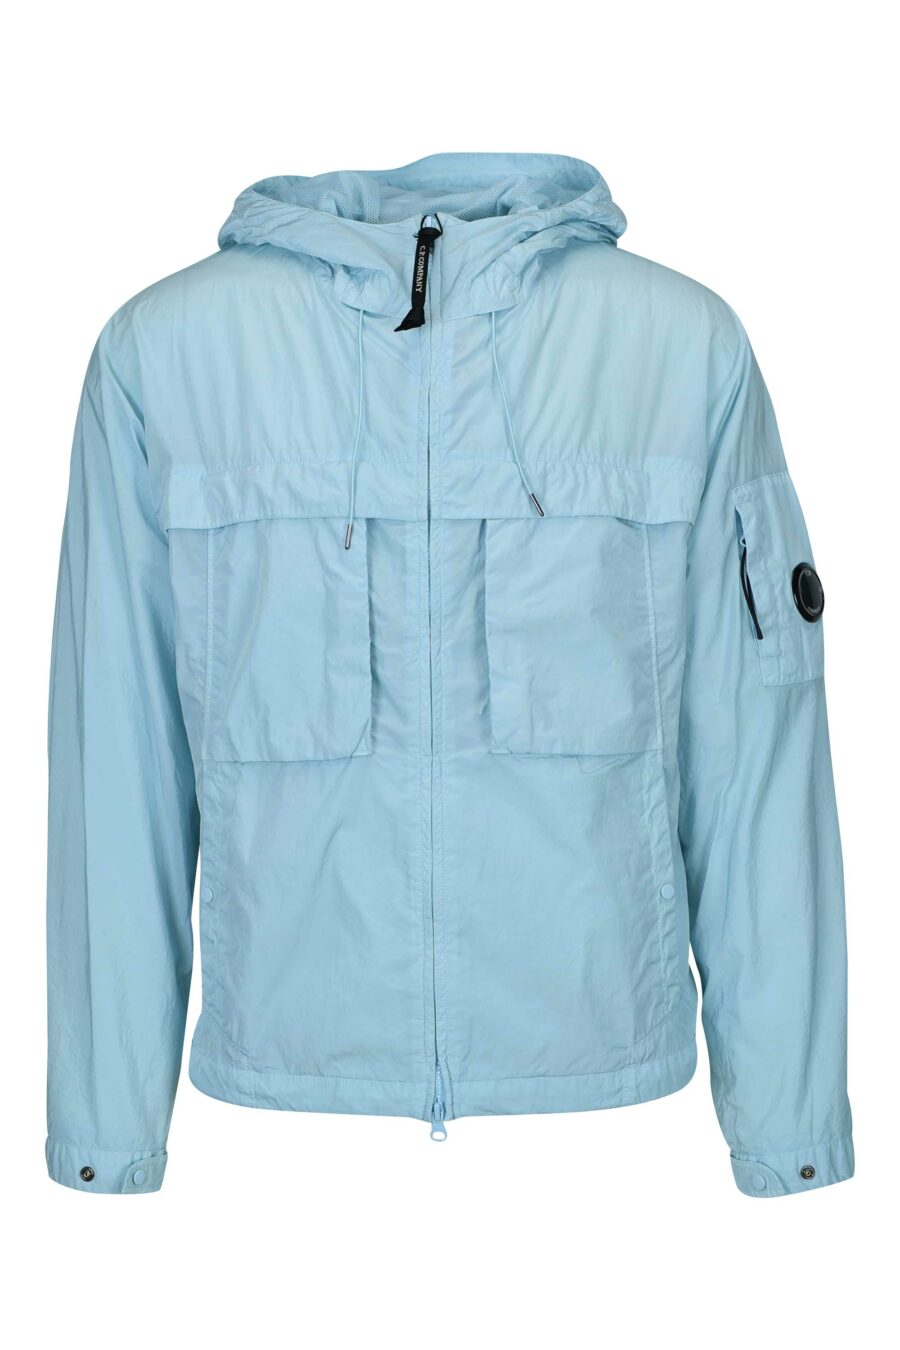 Light blue jacket with hood and logo - 7620943684452